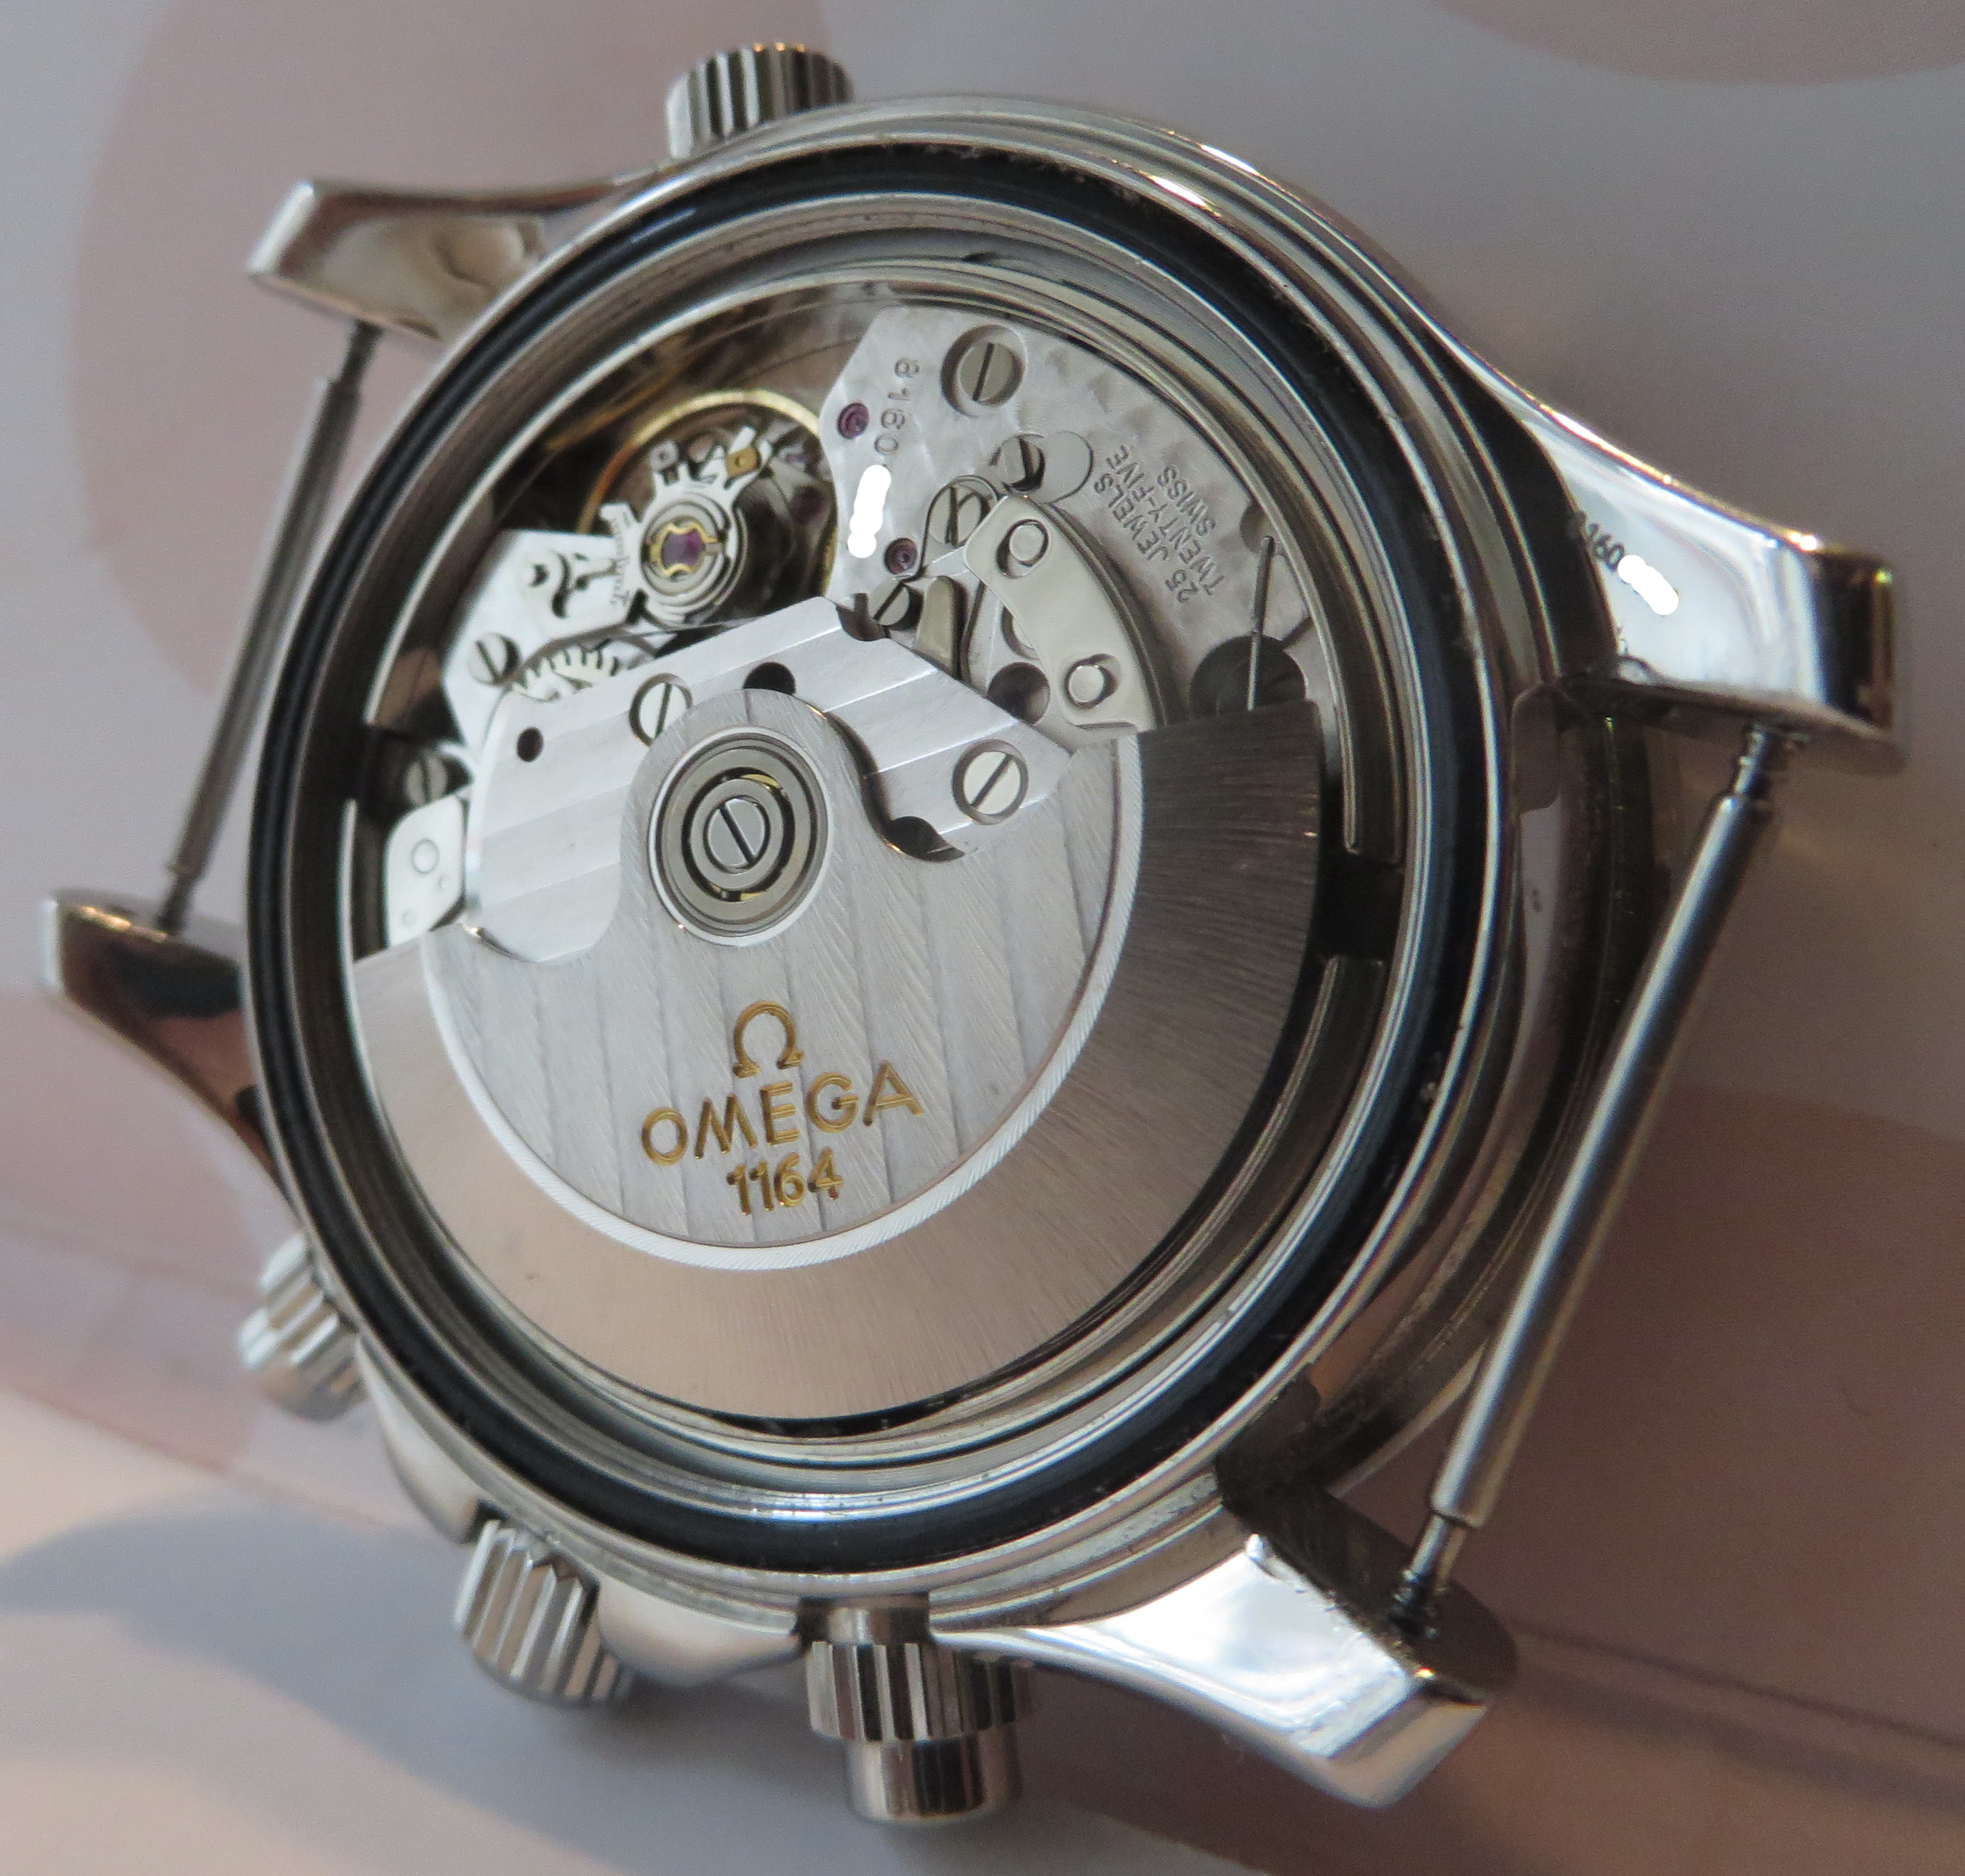 Omega Seamaster Pro Chrono - cal 1164 